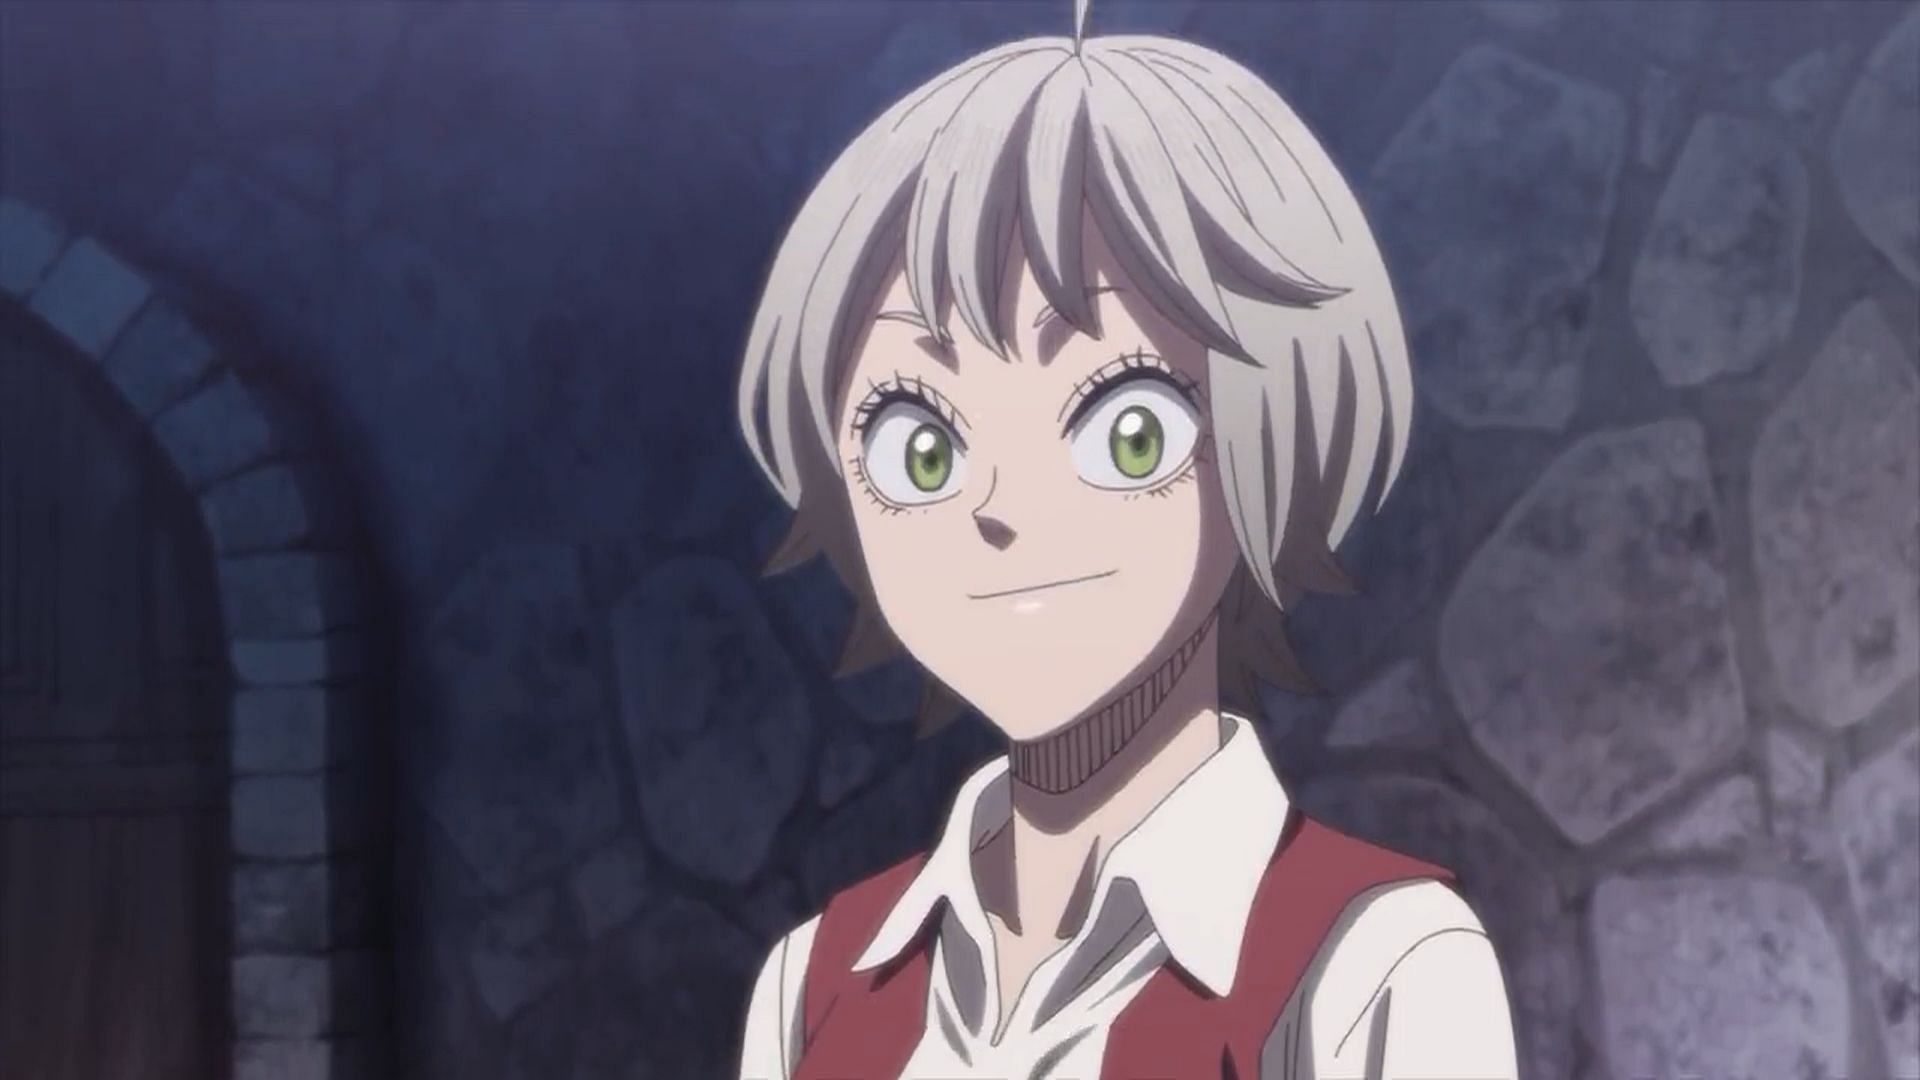 Licita as seen in the anime (Image via Studio Pierrot)